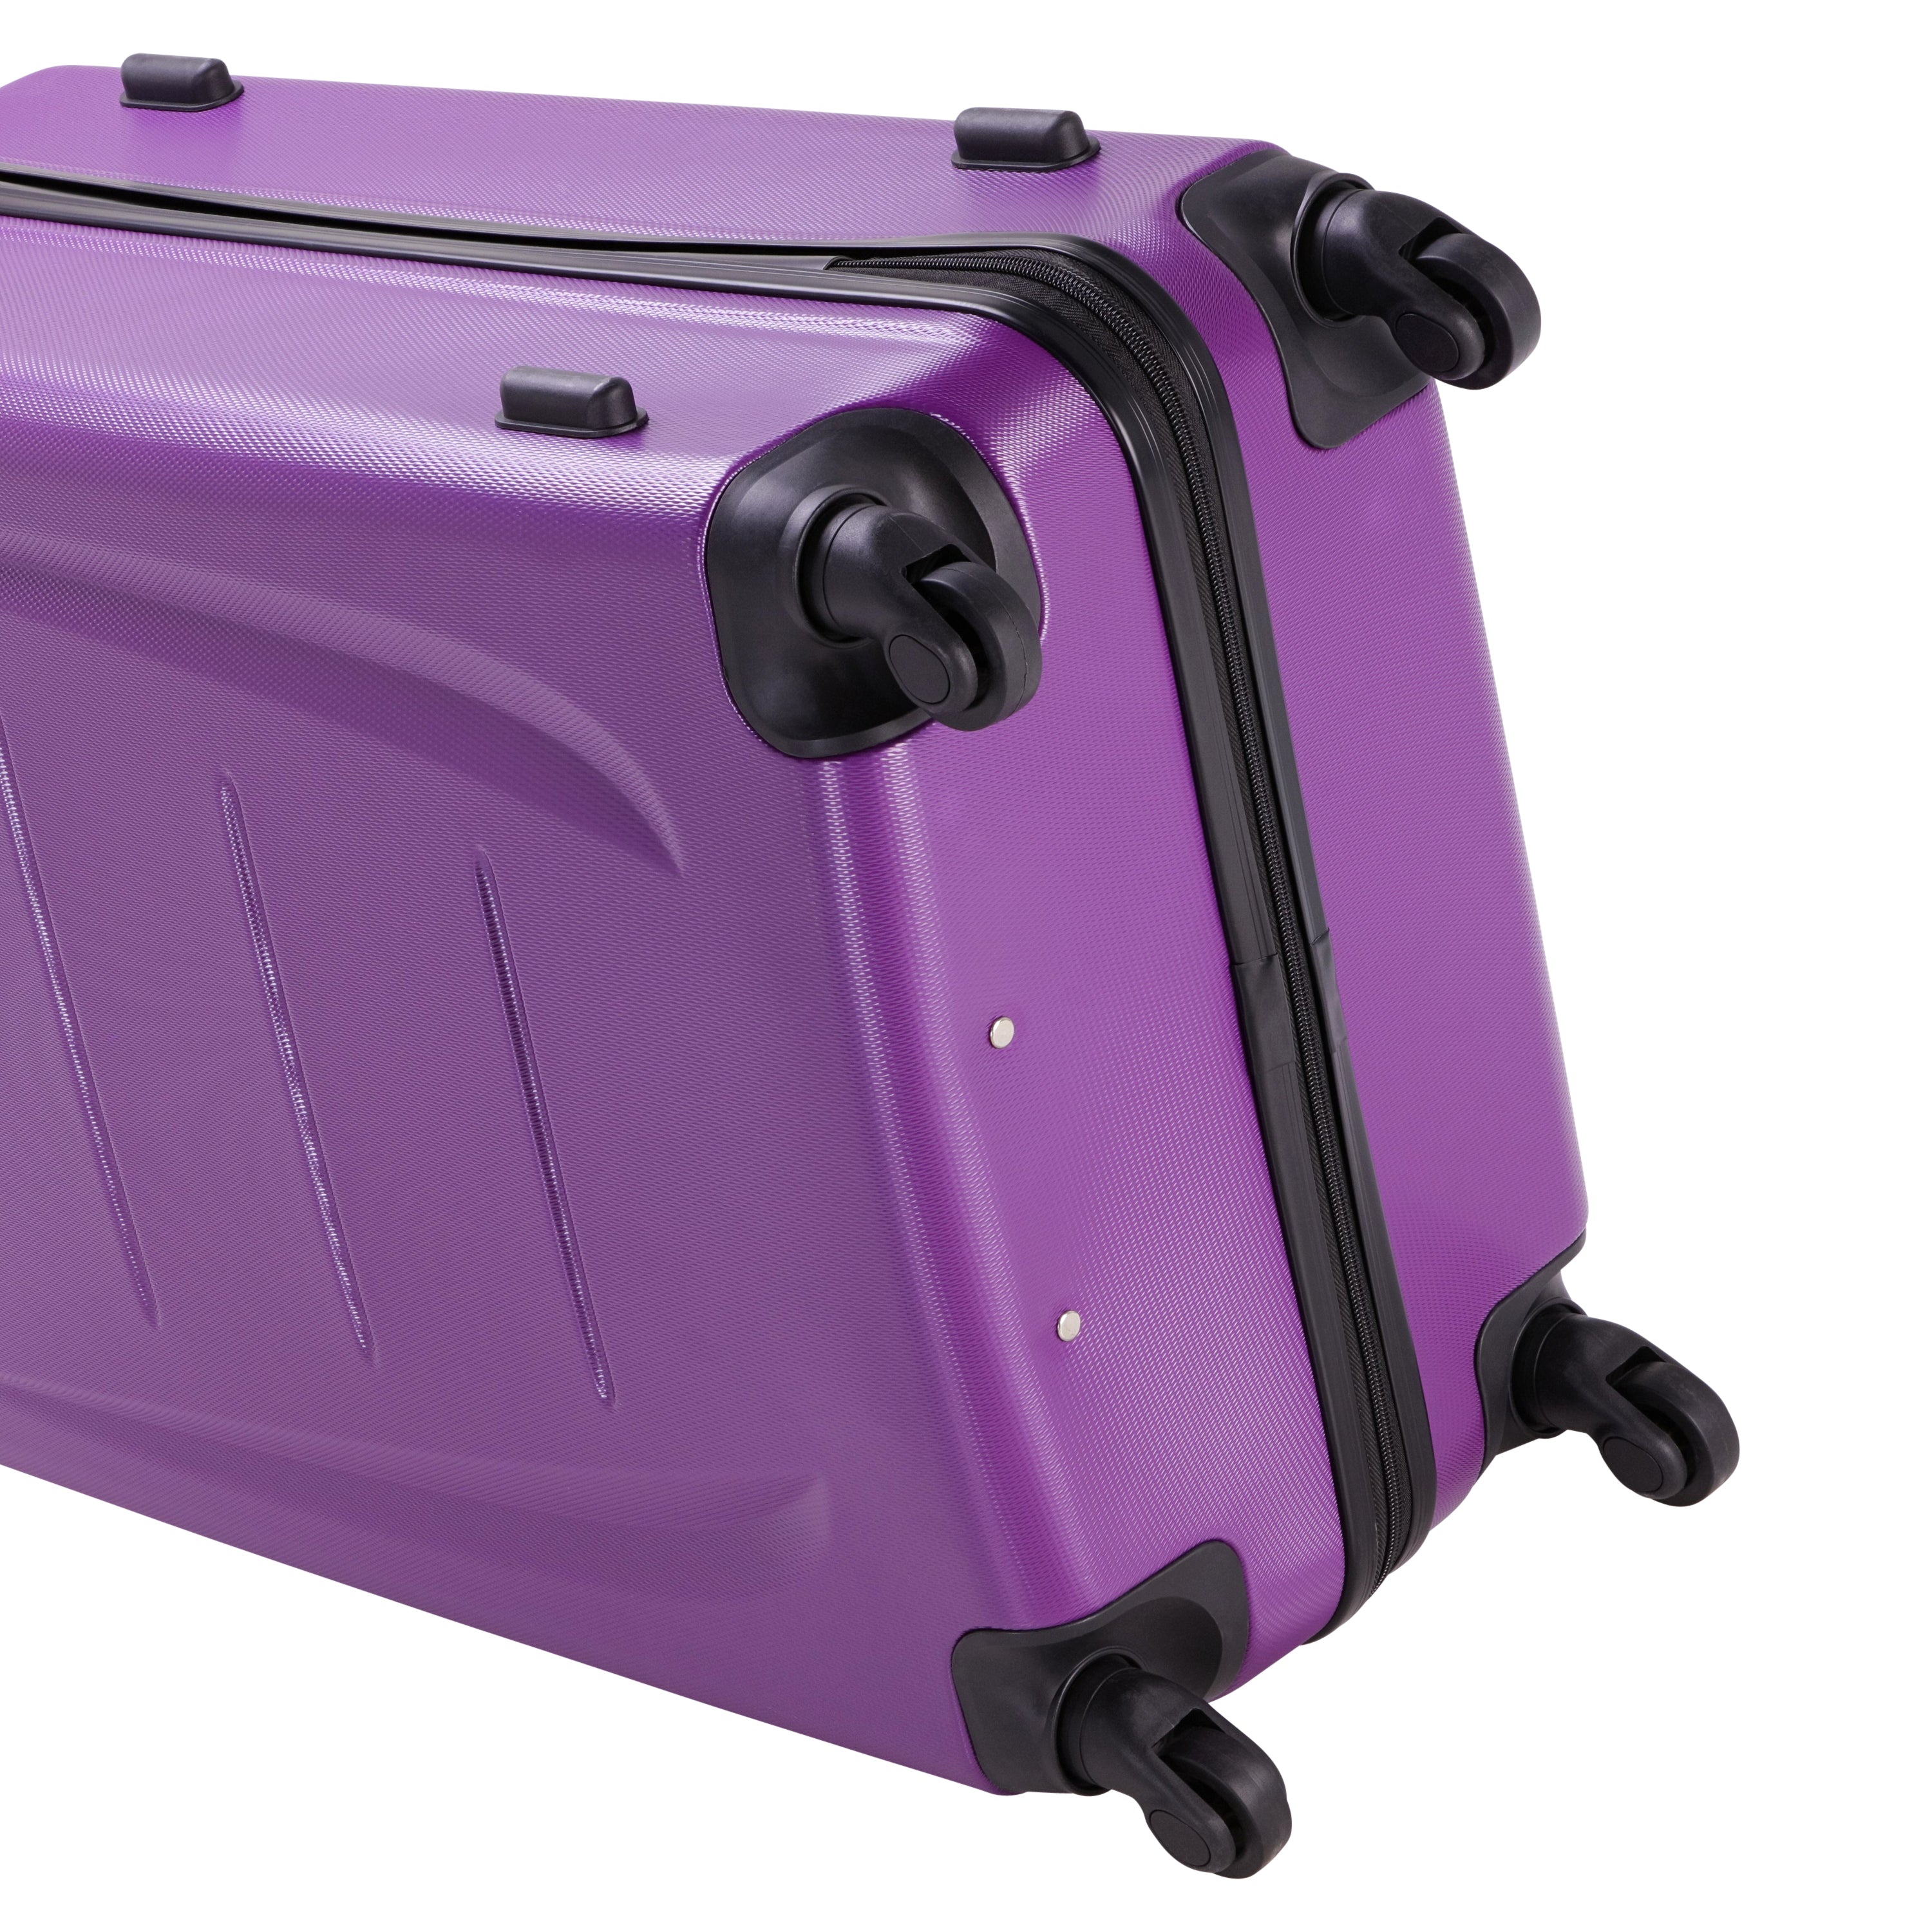 Carry-on cabin trolley bag by Senator luggage  (KH9034-20) - buyluggageonline